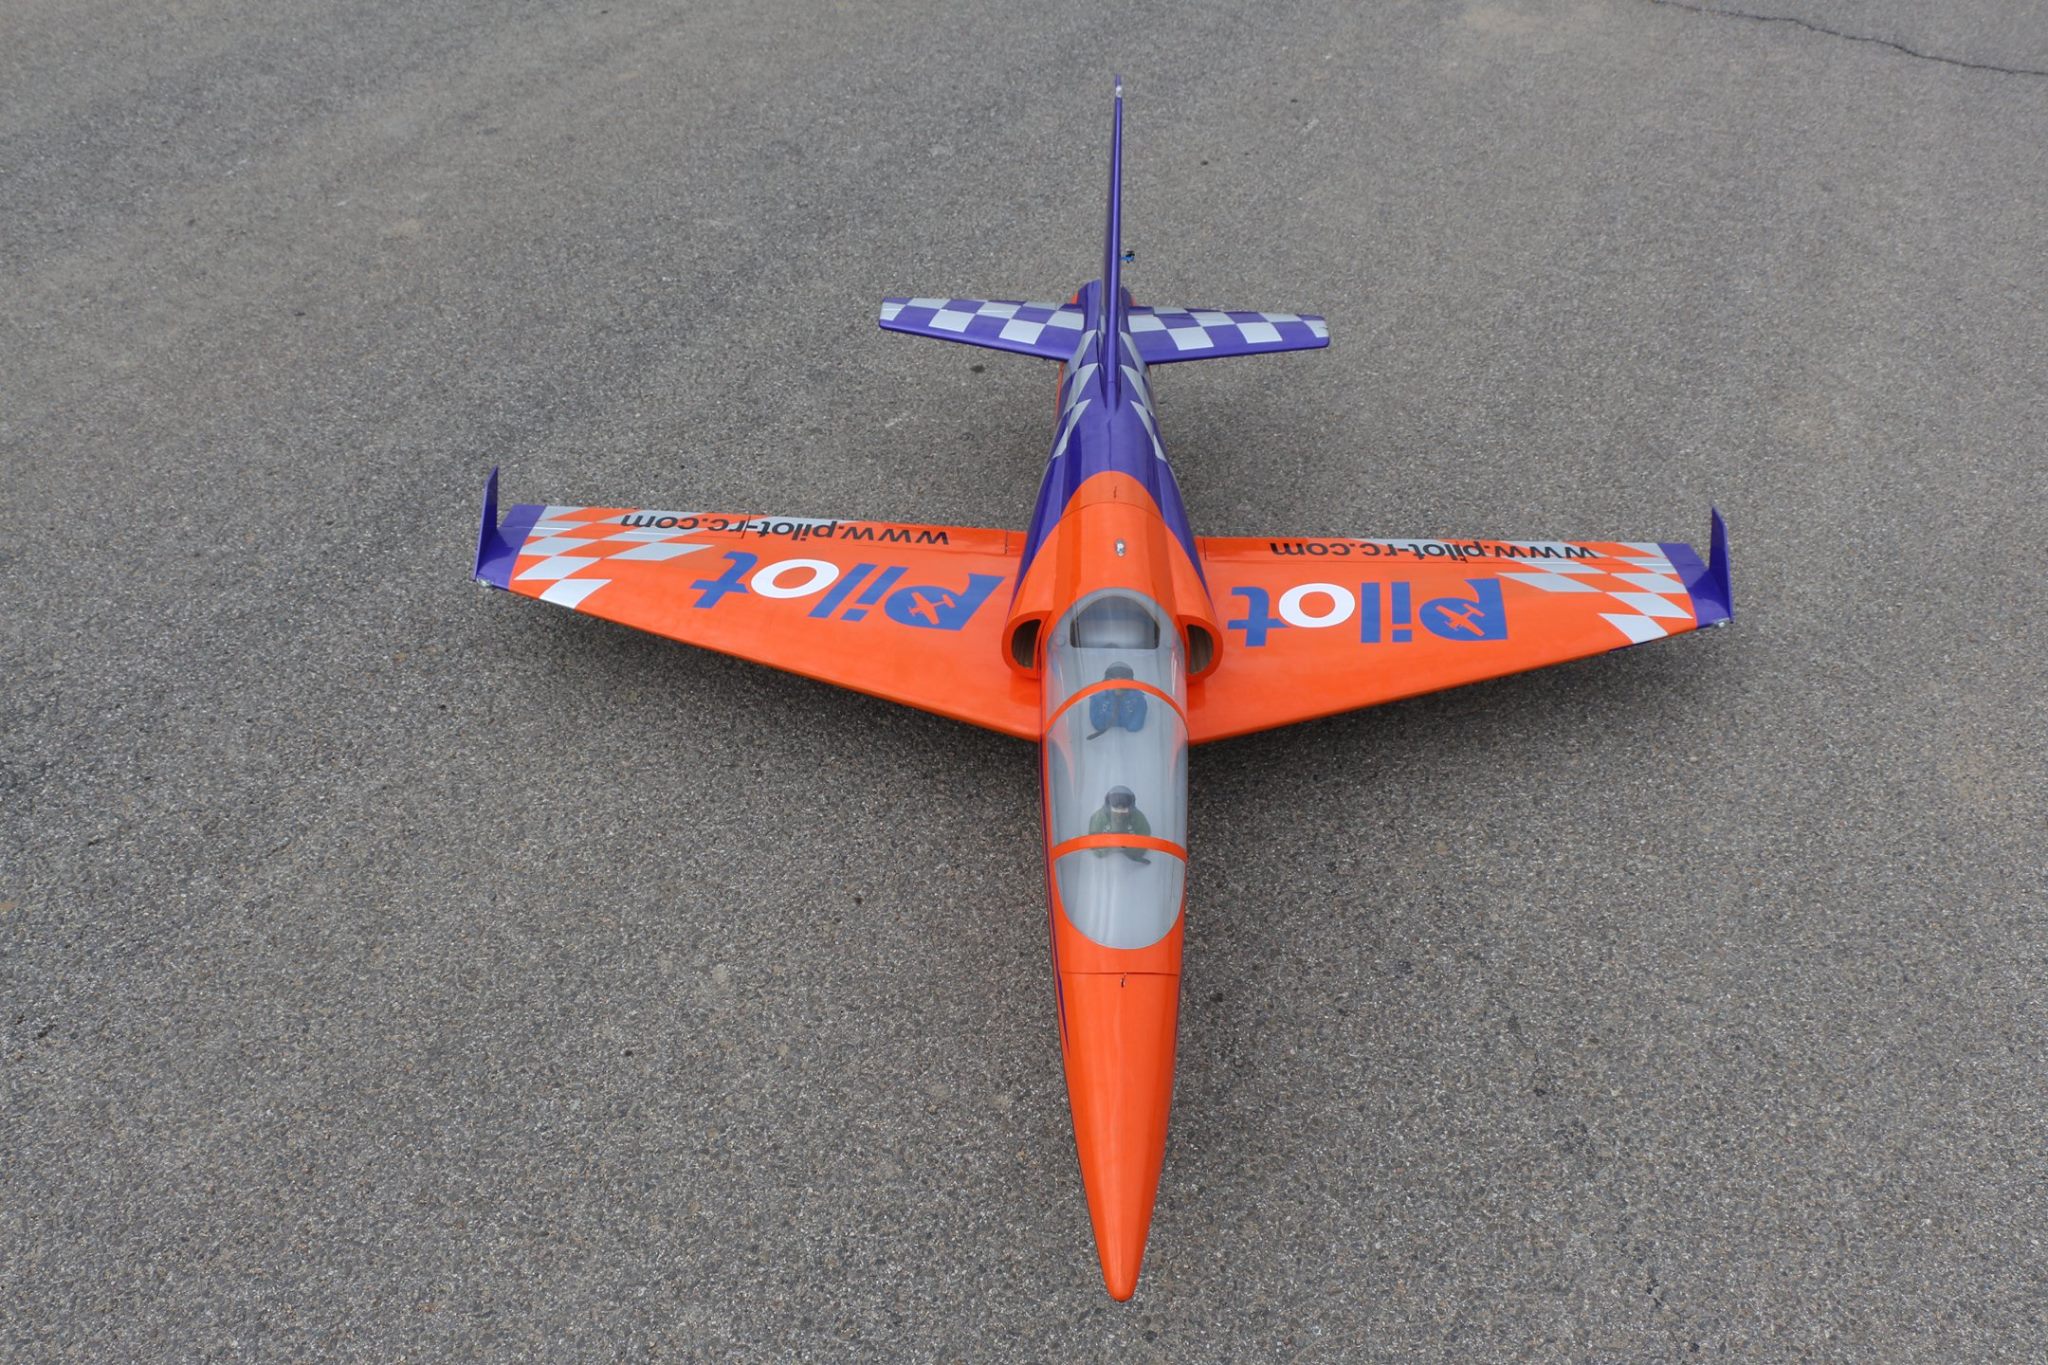 2nd 71" dolphin jet prototype with new orange/purple scheme - RCU Forums